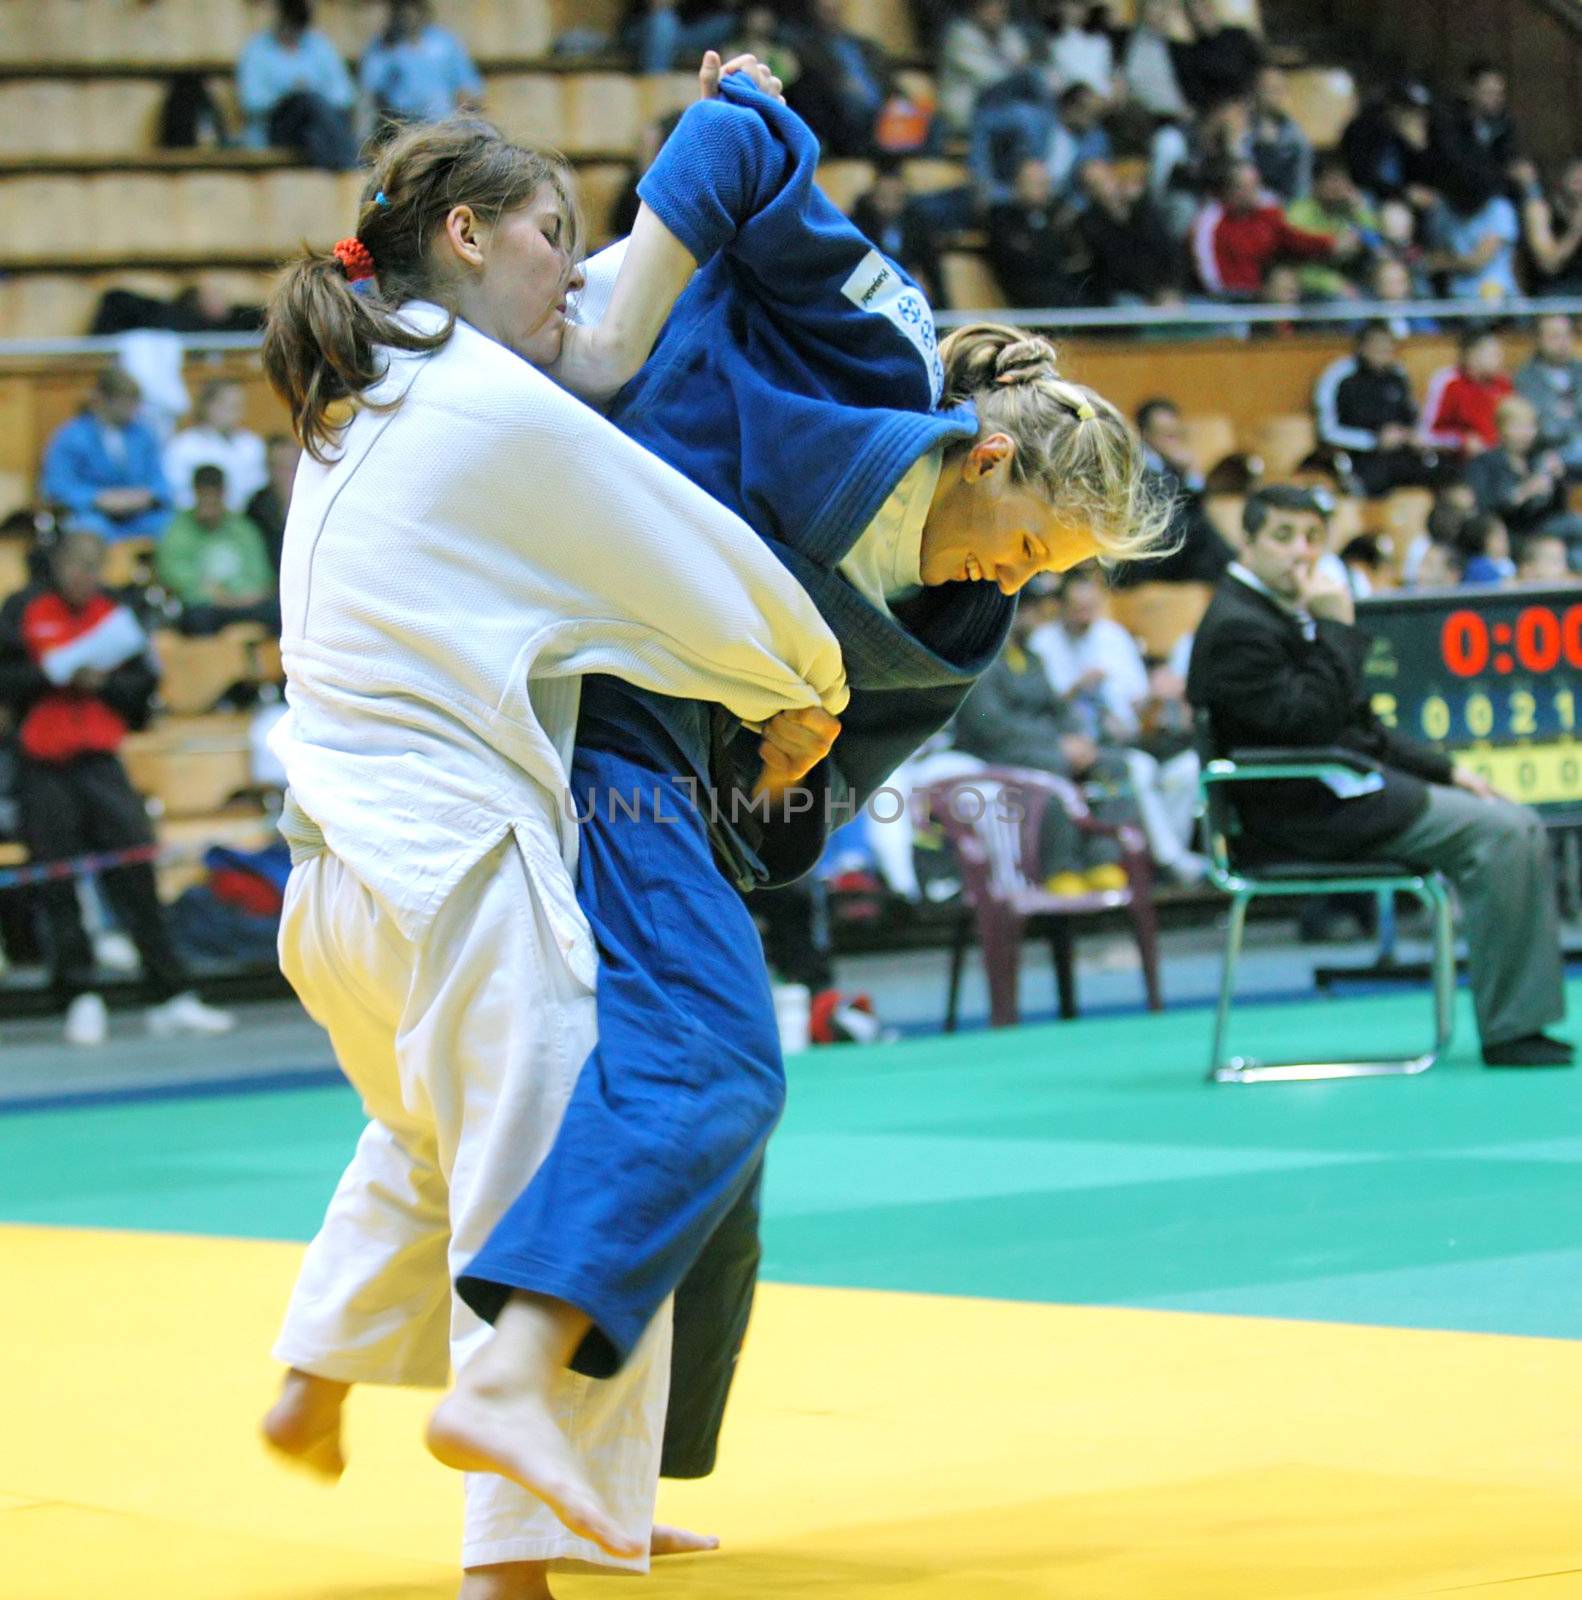 Judo by joyfull